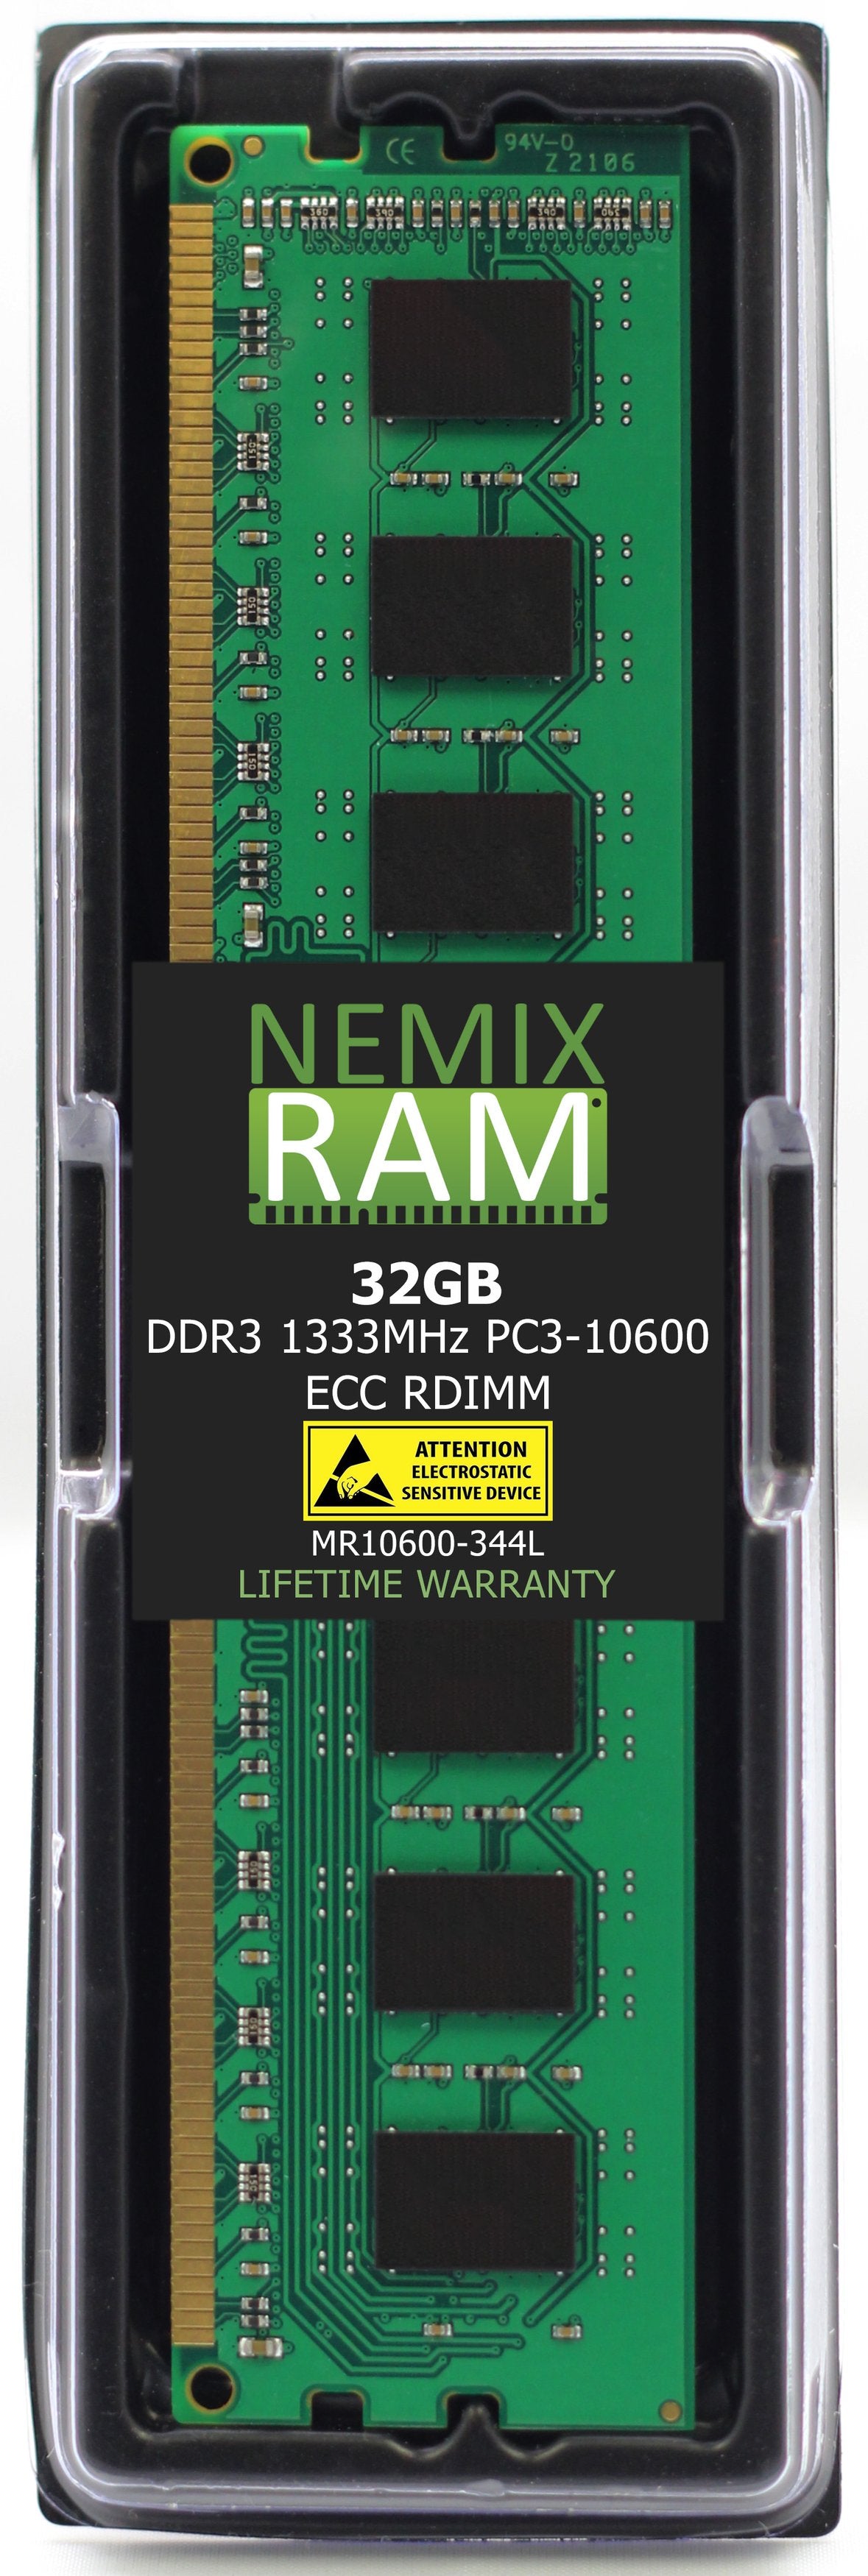 NEC Express5800 R120e Memory Module N8102-575F 32GB DDR3 1333MHZ PC3-10600 RDIMM